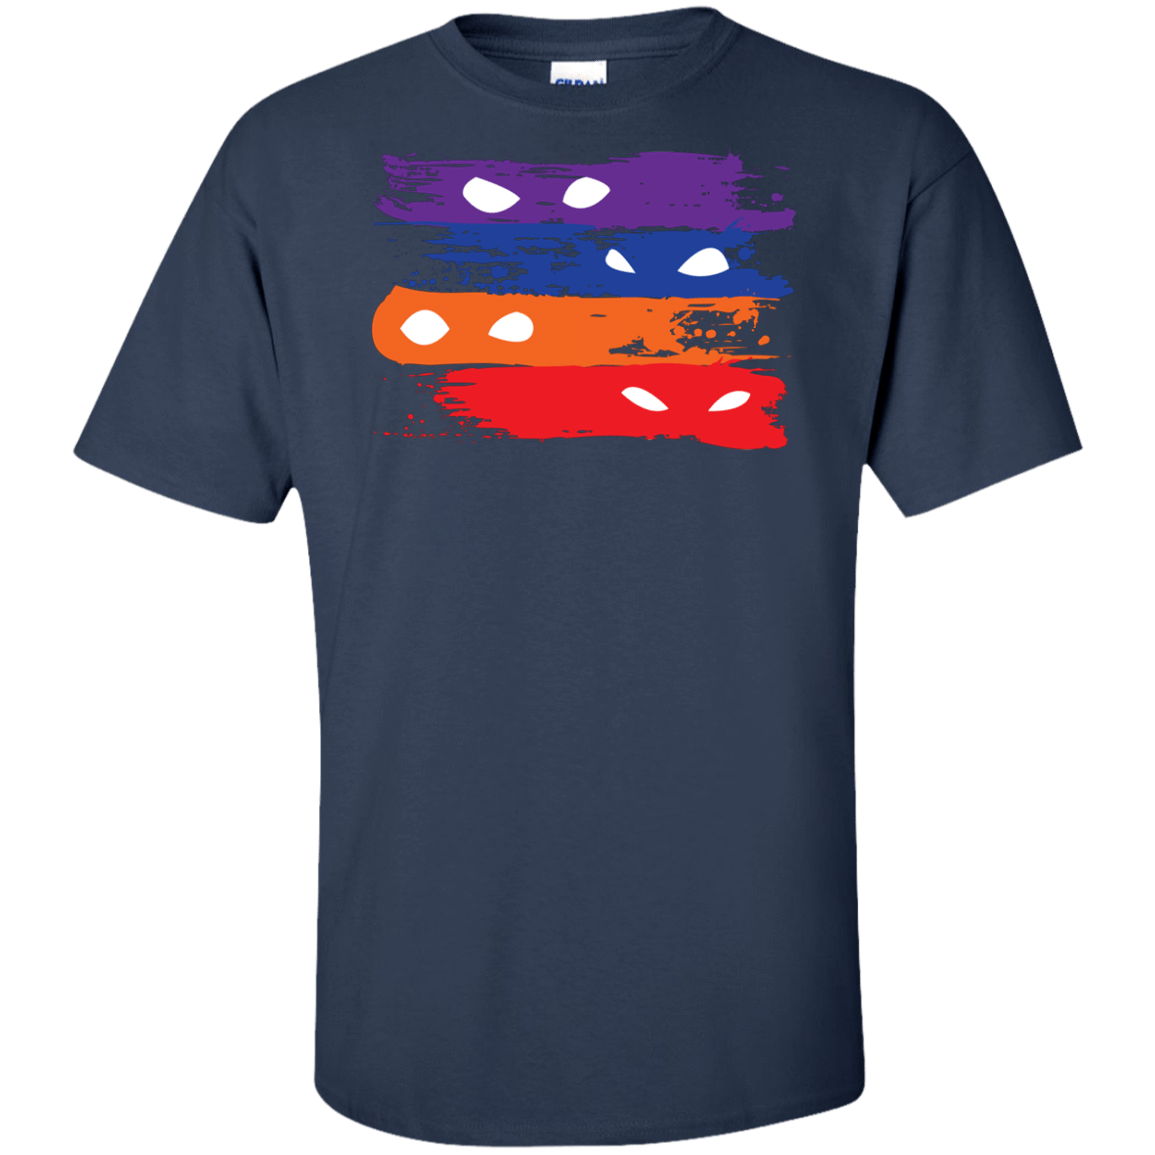 T-Shirts Navy / XLT Ninja Flag Tall T-Shirt